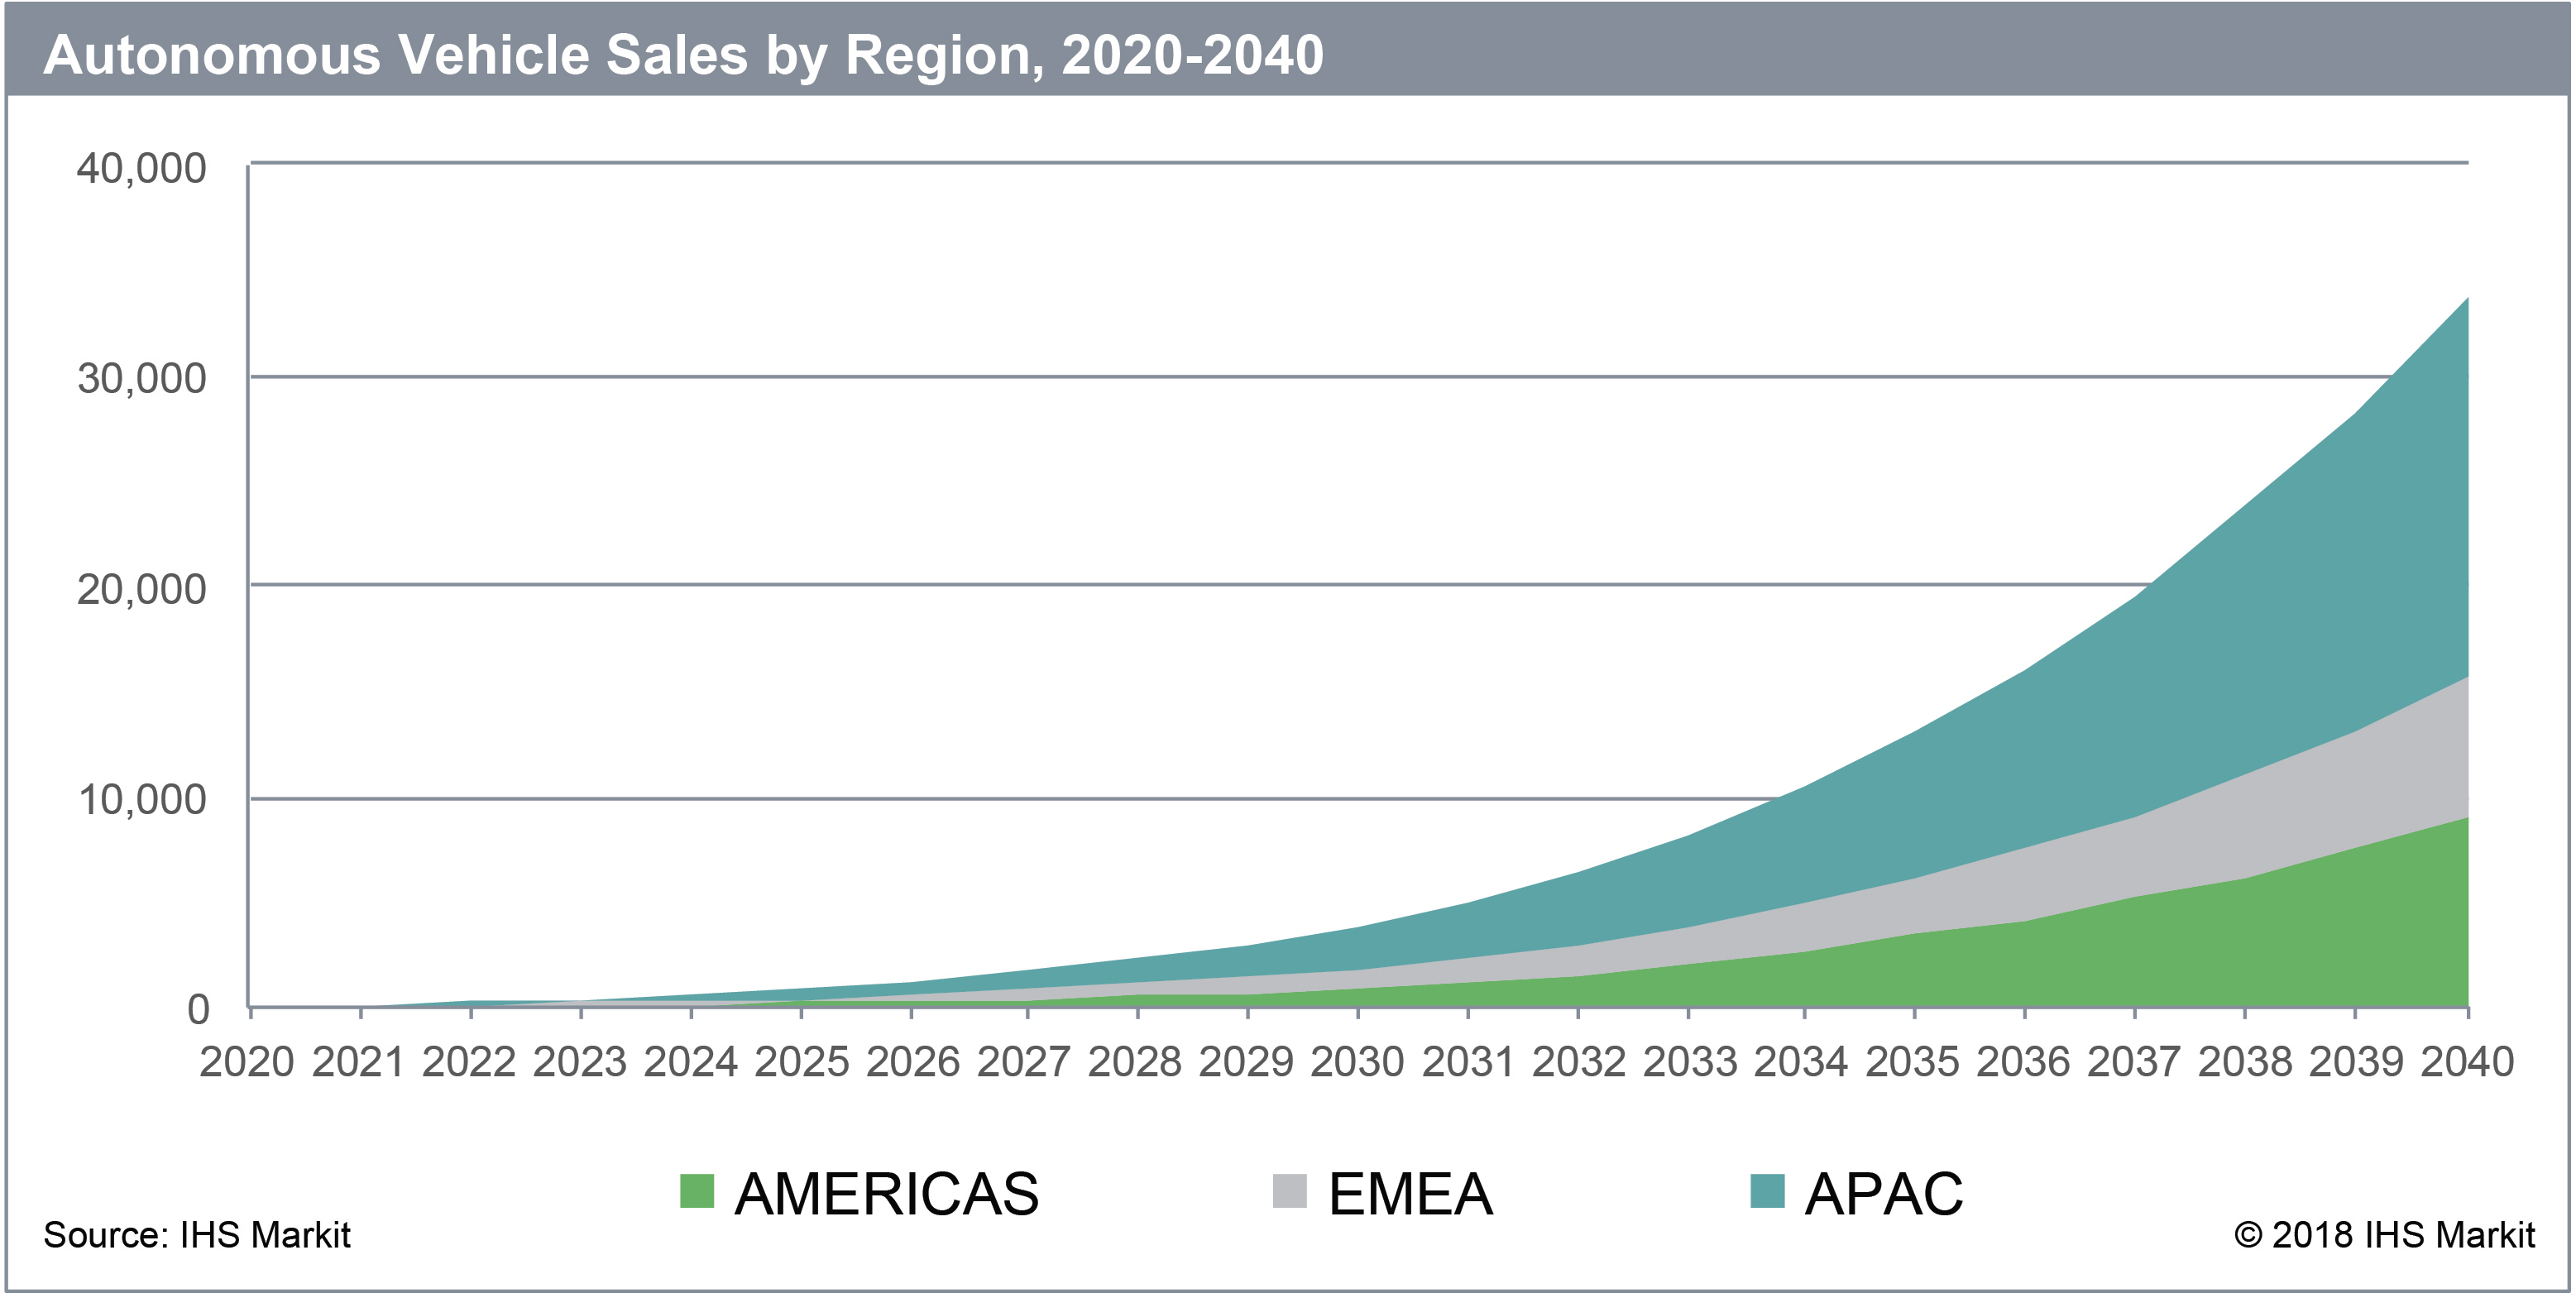 Autonomous Vehicle Sales to Surpass 33 Million Annually in 2040